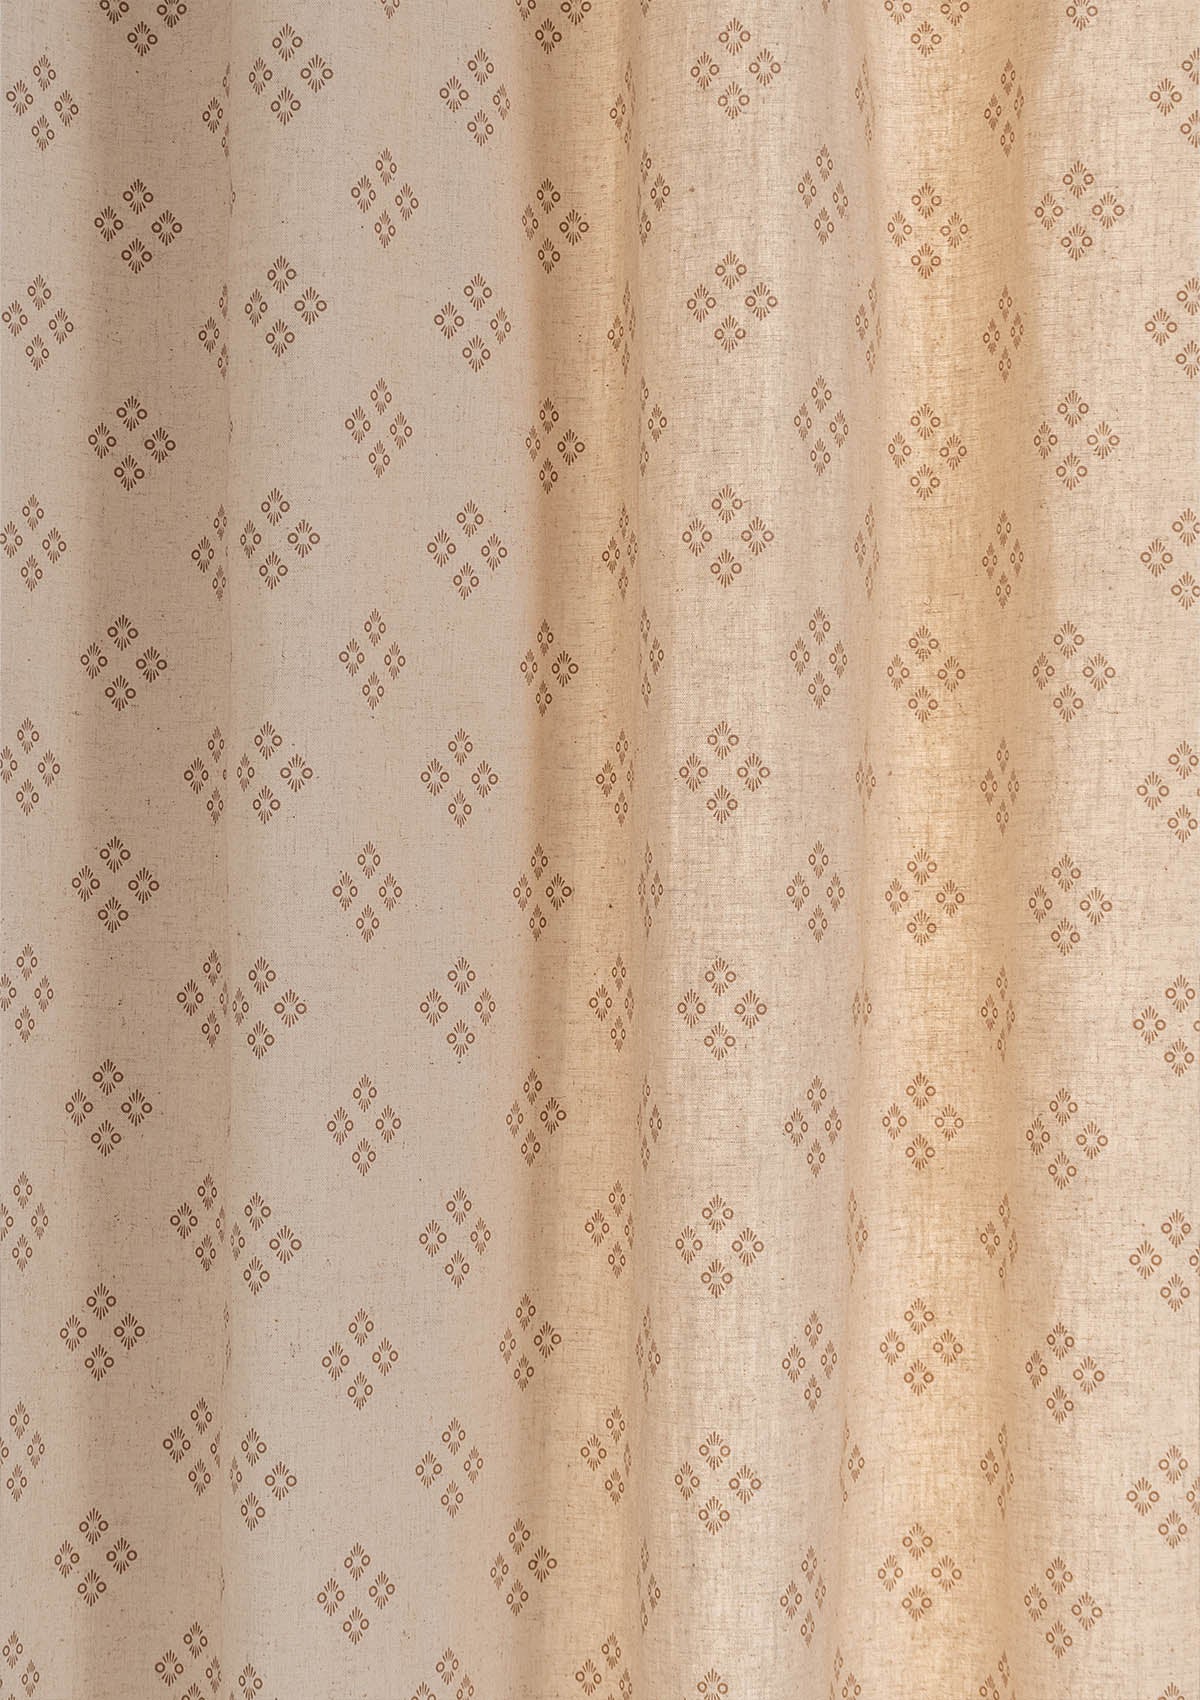 Harvest linen minimal design fabric for living room - Room darkeing - Brown